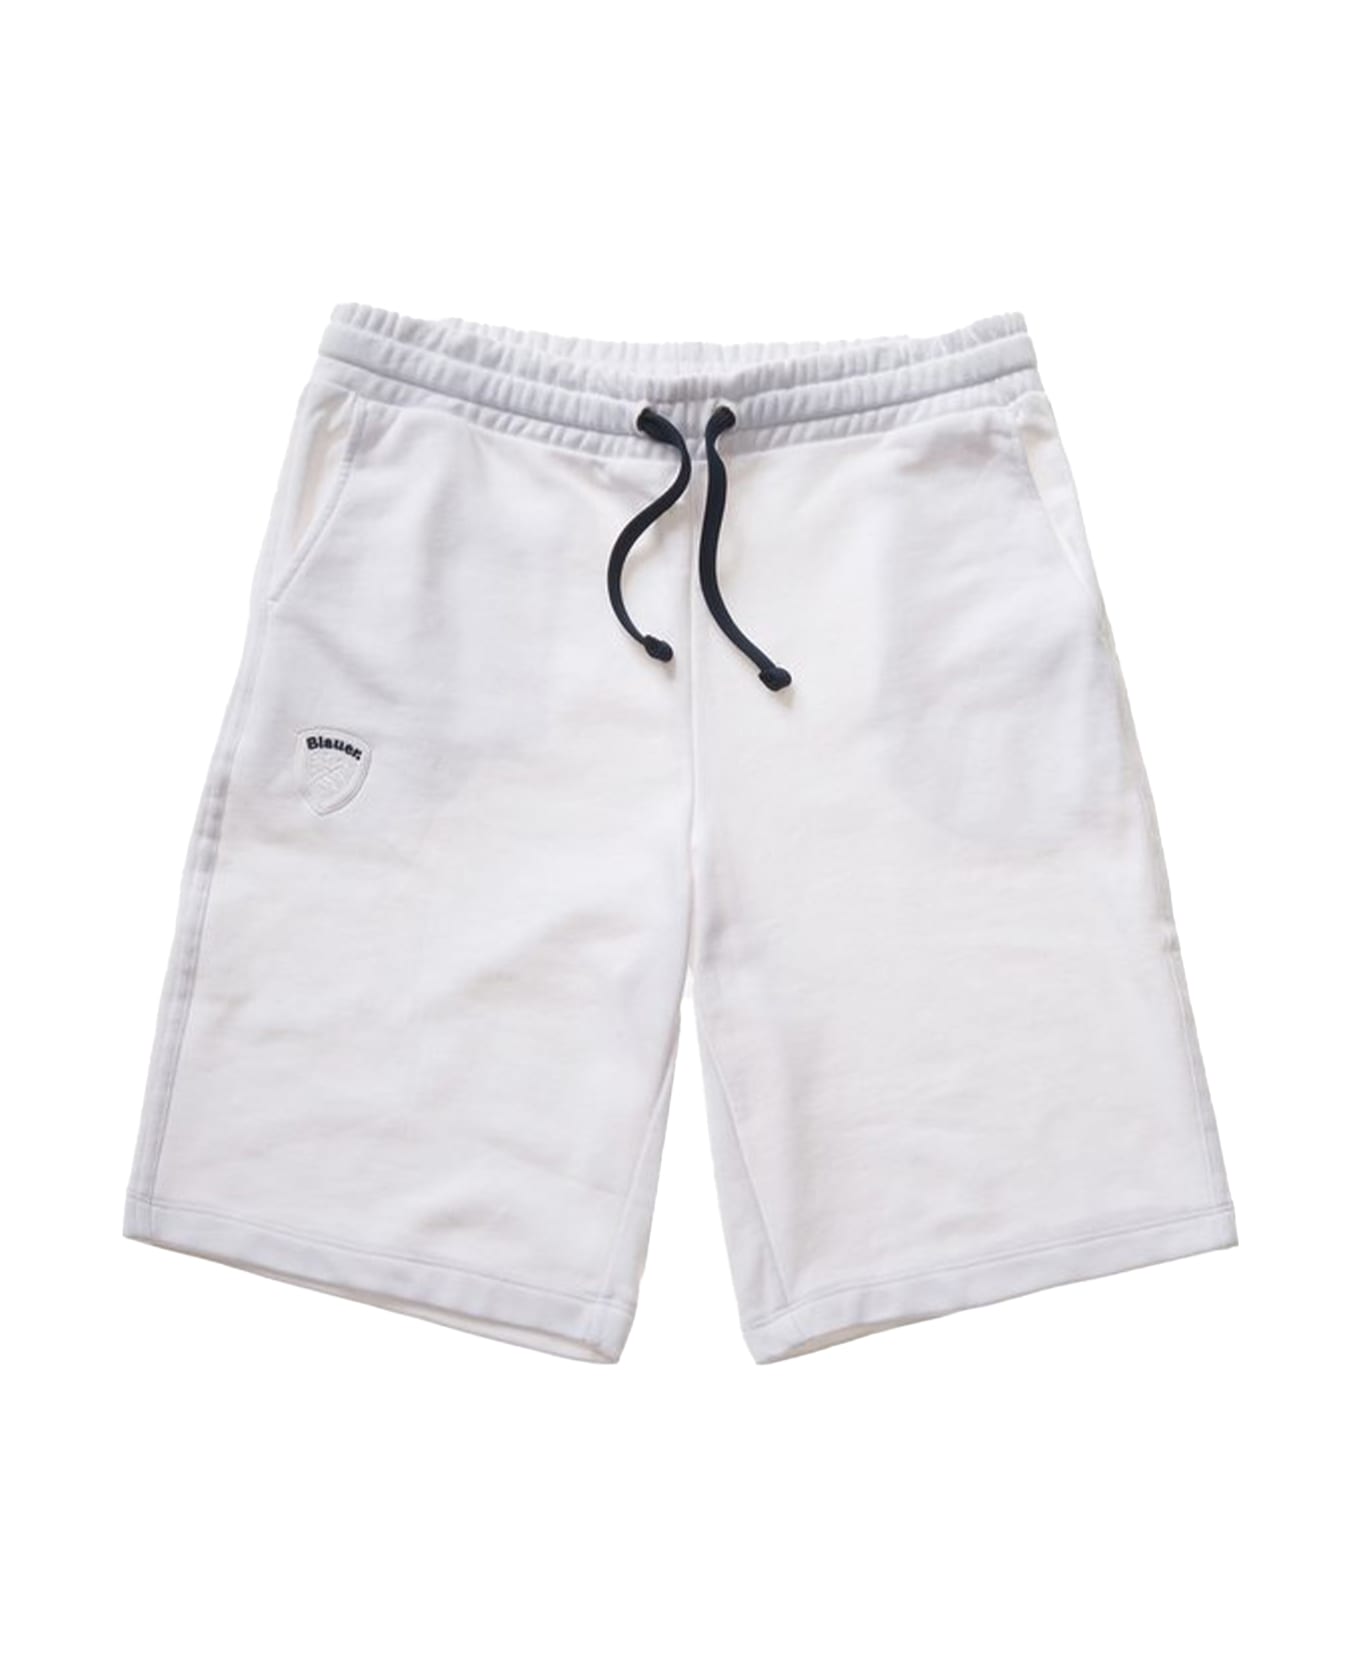 Blauer Bermuda Shorts In White Fleece - BIANCO OTTICO